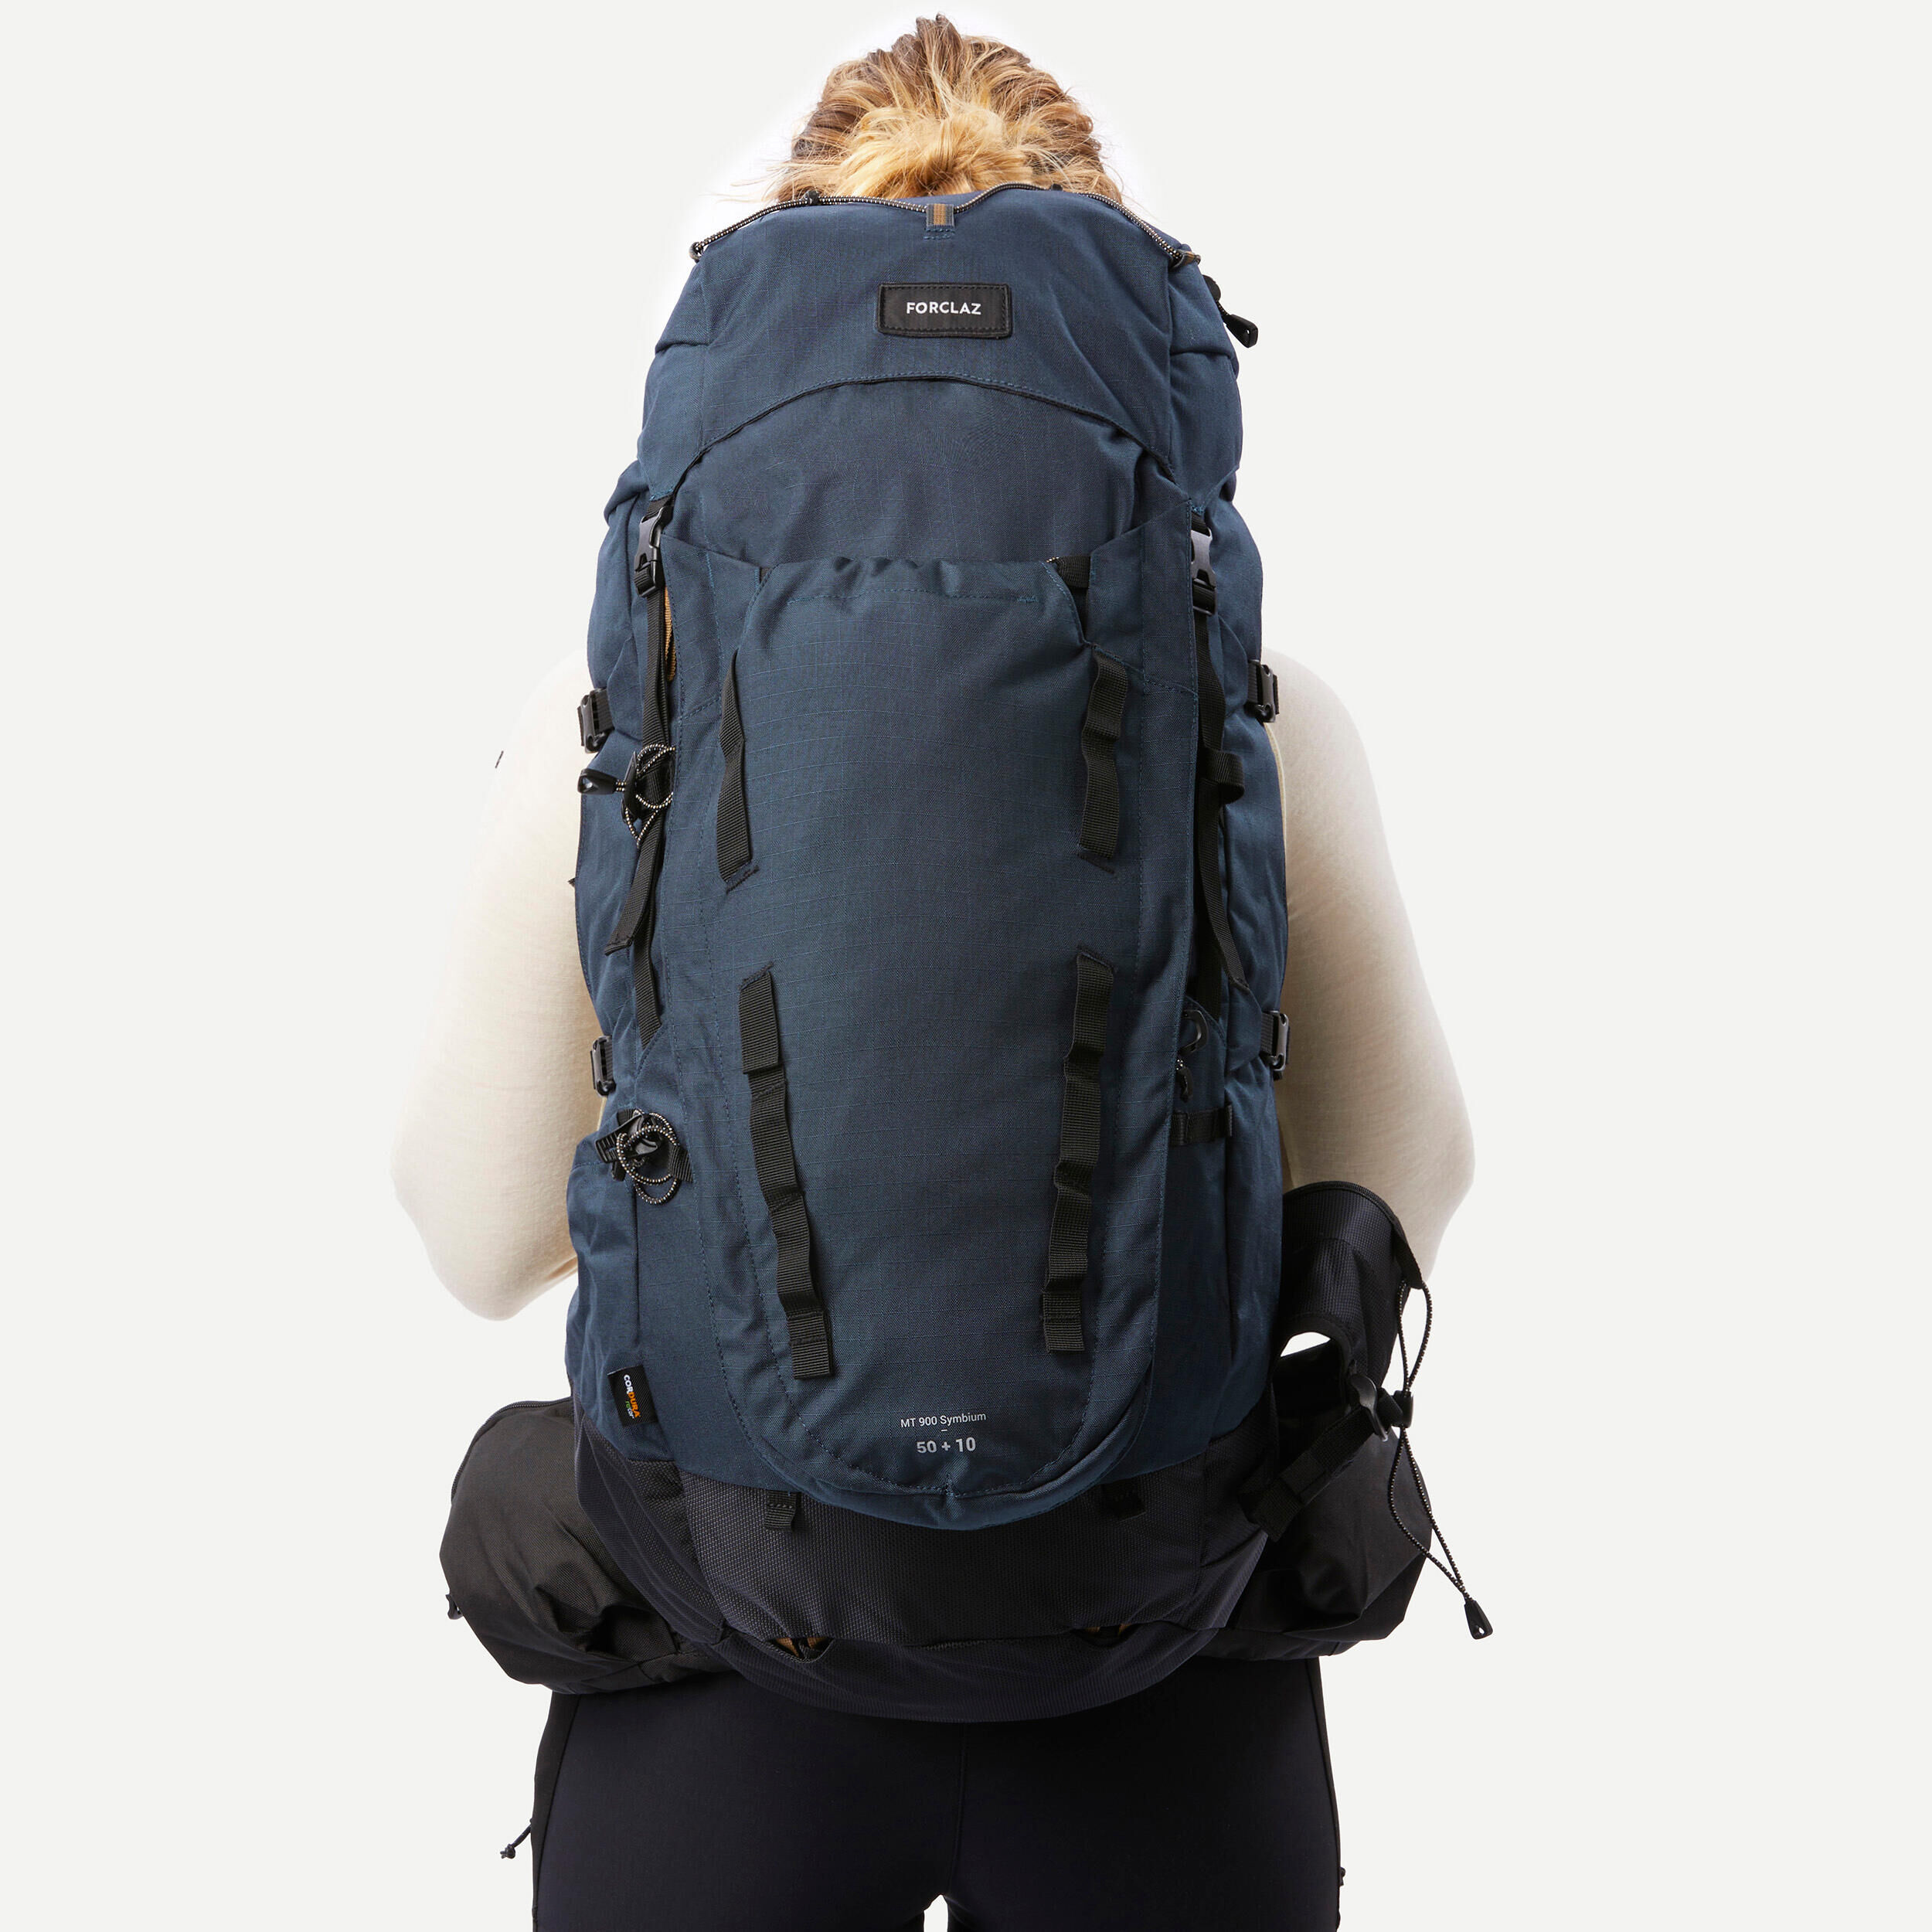 FORCLAZ Women’s trekking backpack 50+10L - MT900 Symbium